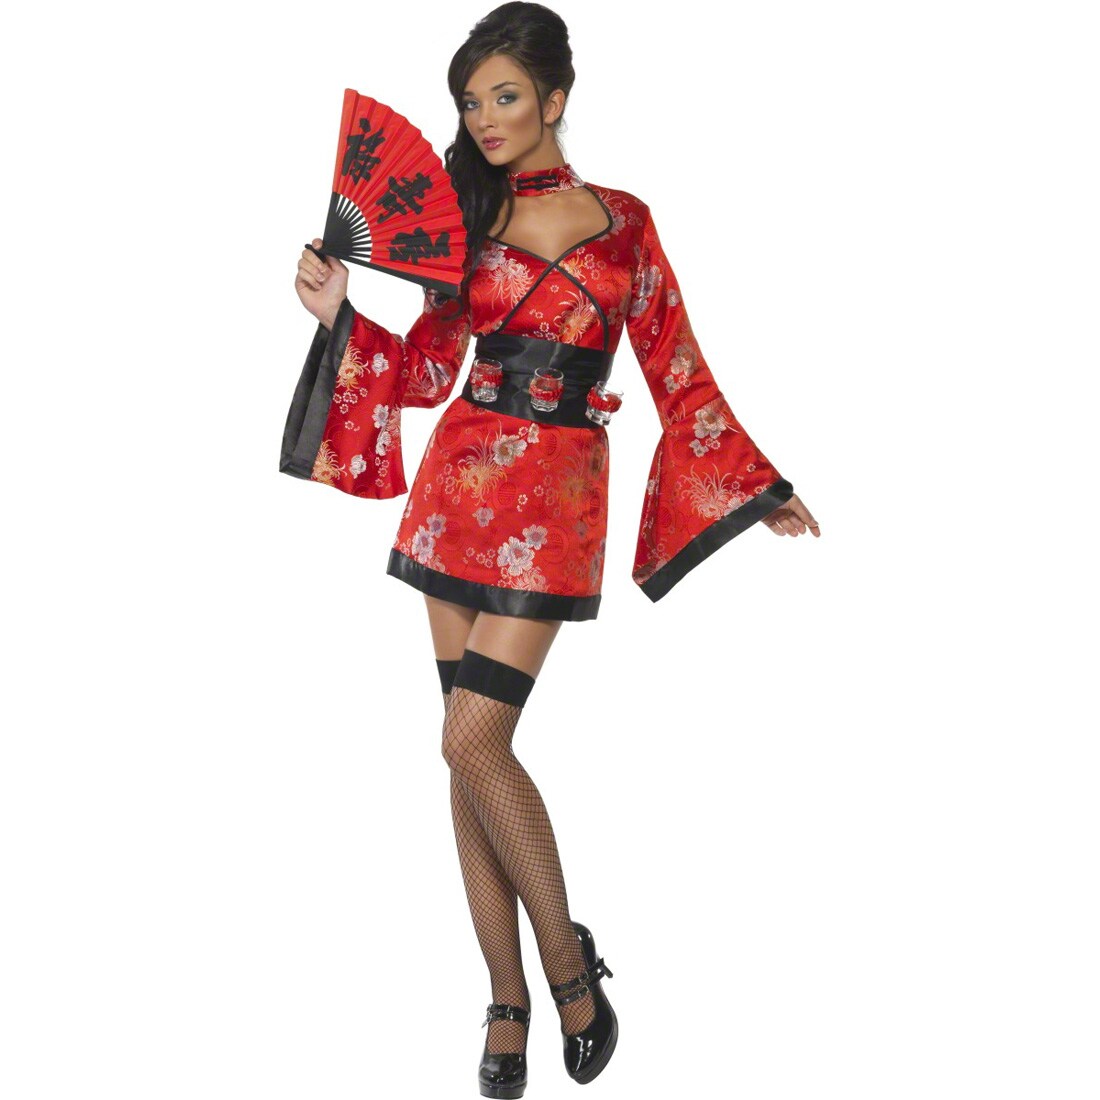 dana mccune recommends Sexy Geisha Girl Costumes